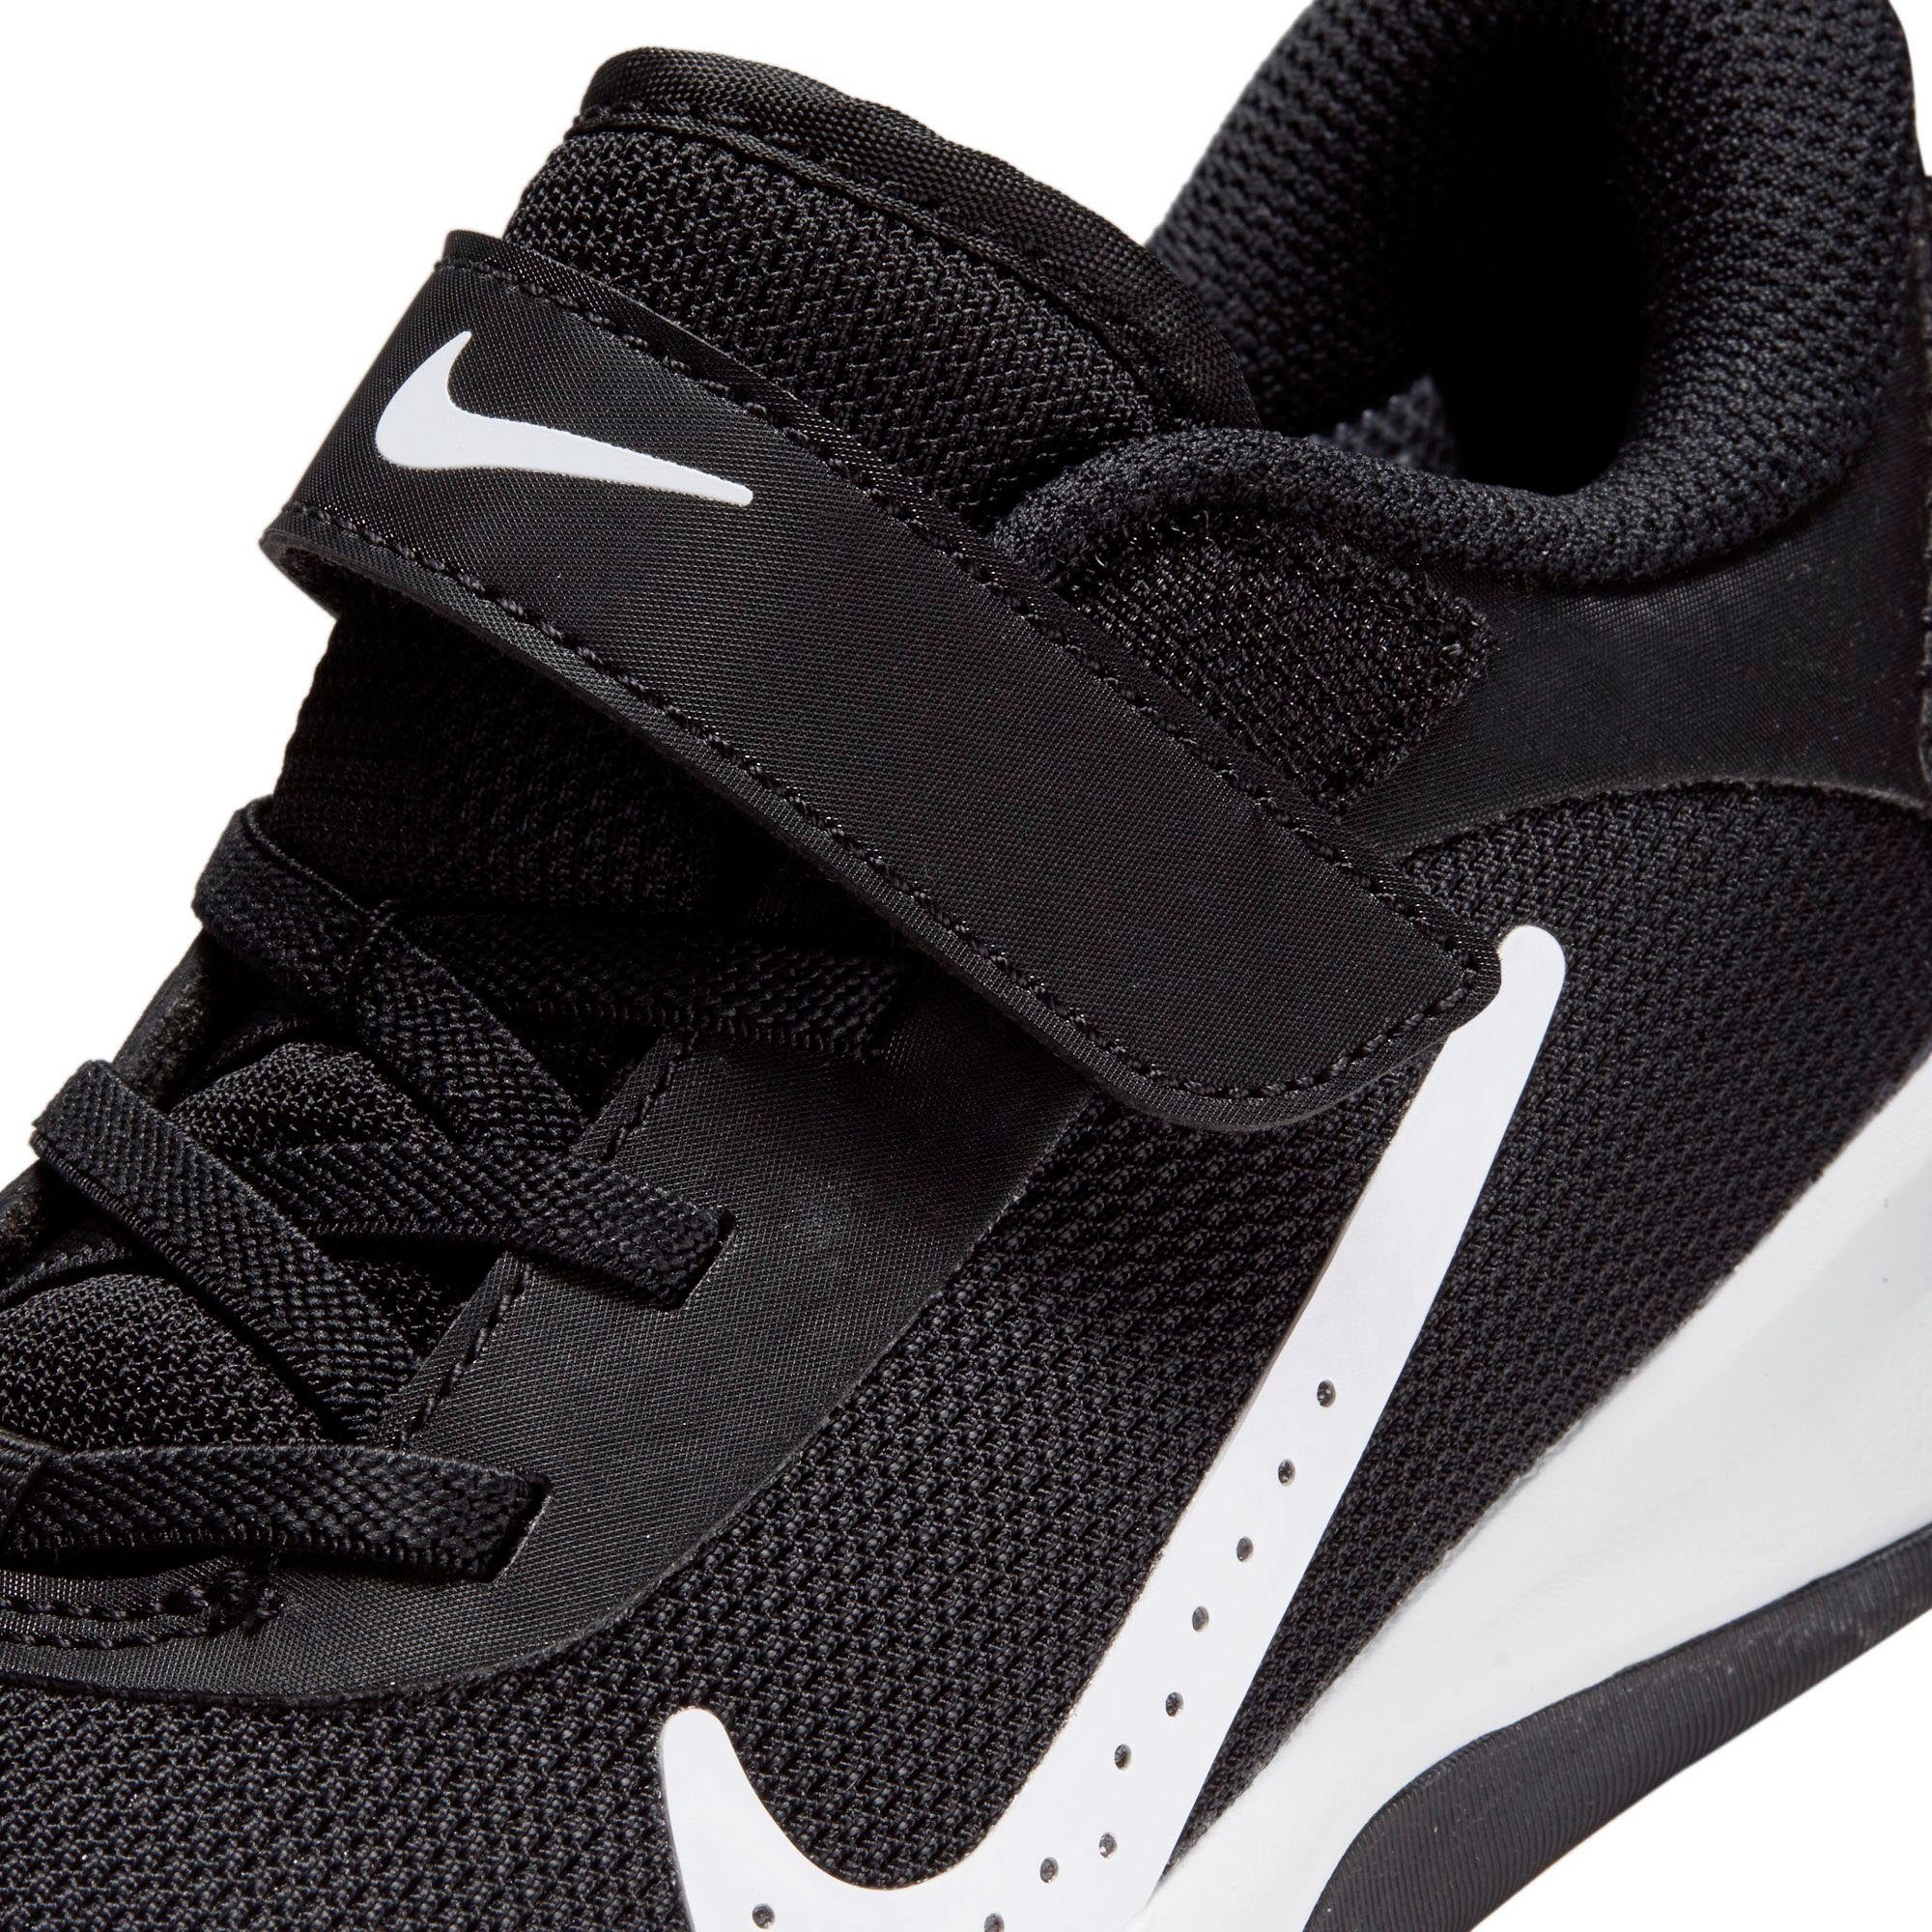 Omni Hallenschuh (PS) Multi-Court black-white Nike